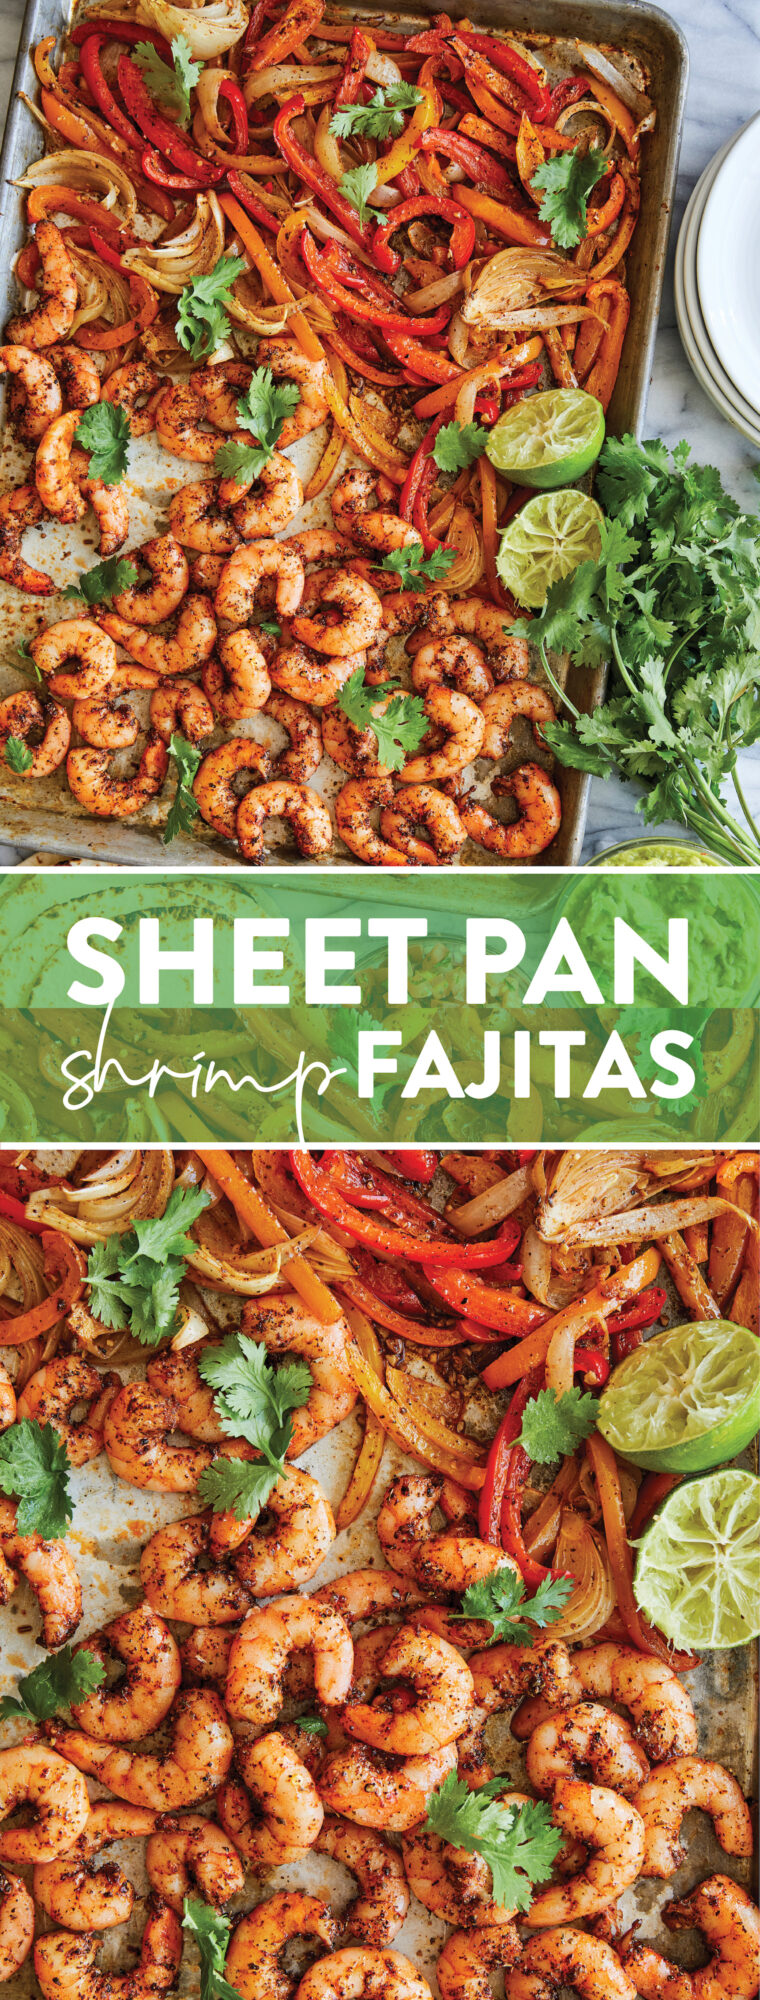 Sheet Pan Shrimp Fajitas - The quickest (easiest) sheet pan dinner! Serve with warm tortillas for a lightening fast weeknight meal. SO GOOD!